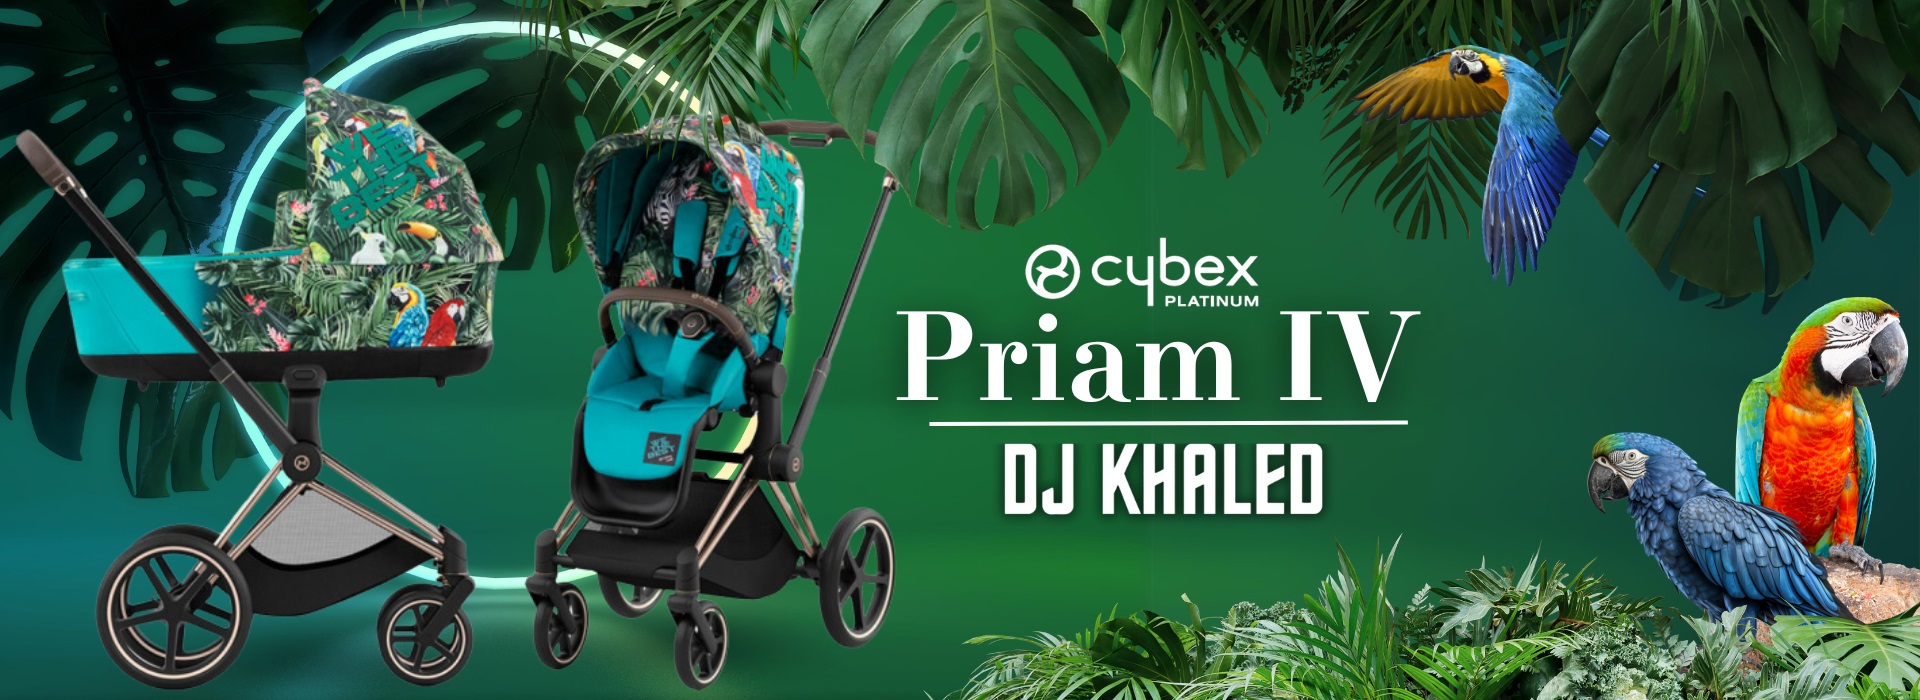 Priam DJ Khaled